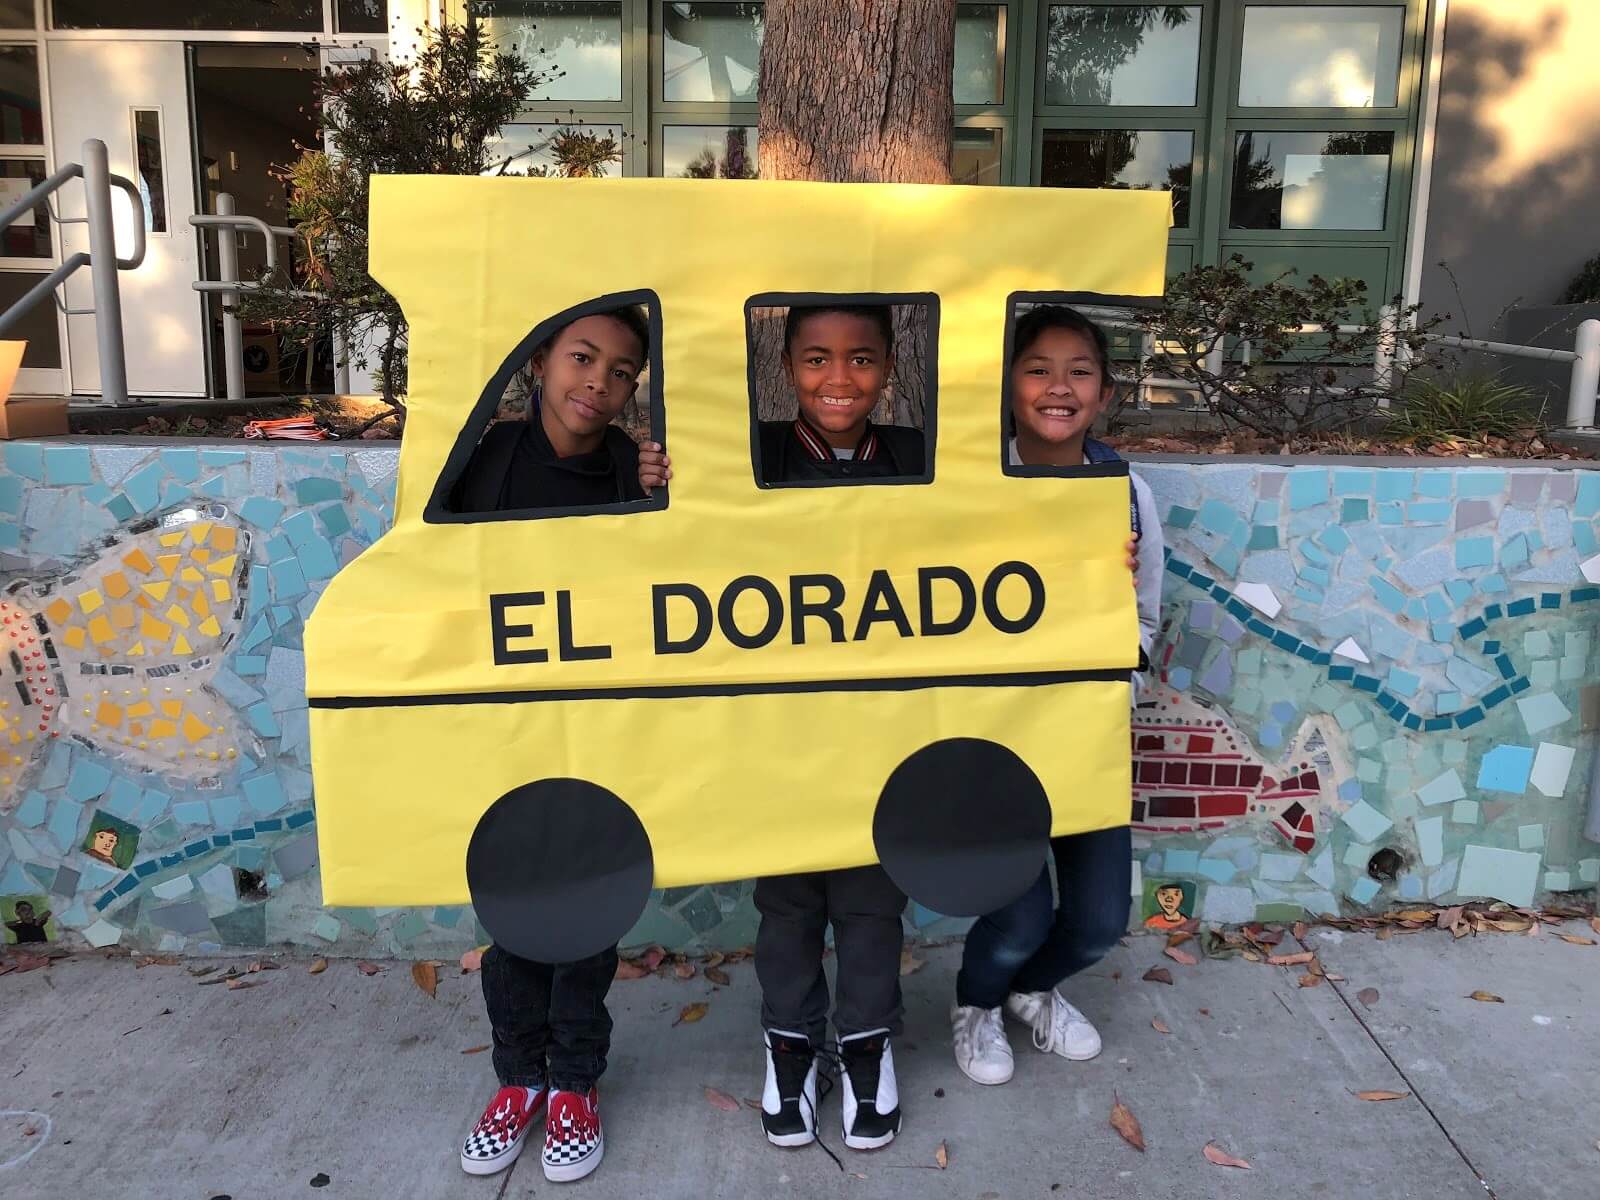 https://walksf.org/wp-content/uploads/2021/07/walking-school-bus-el-dorado.jpg